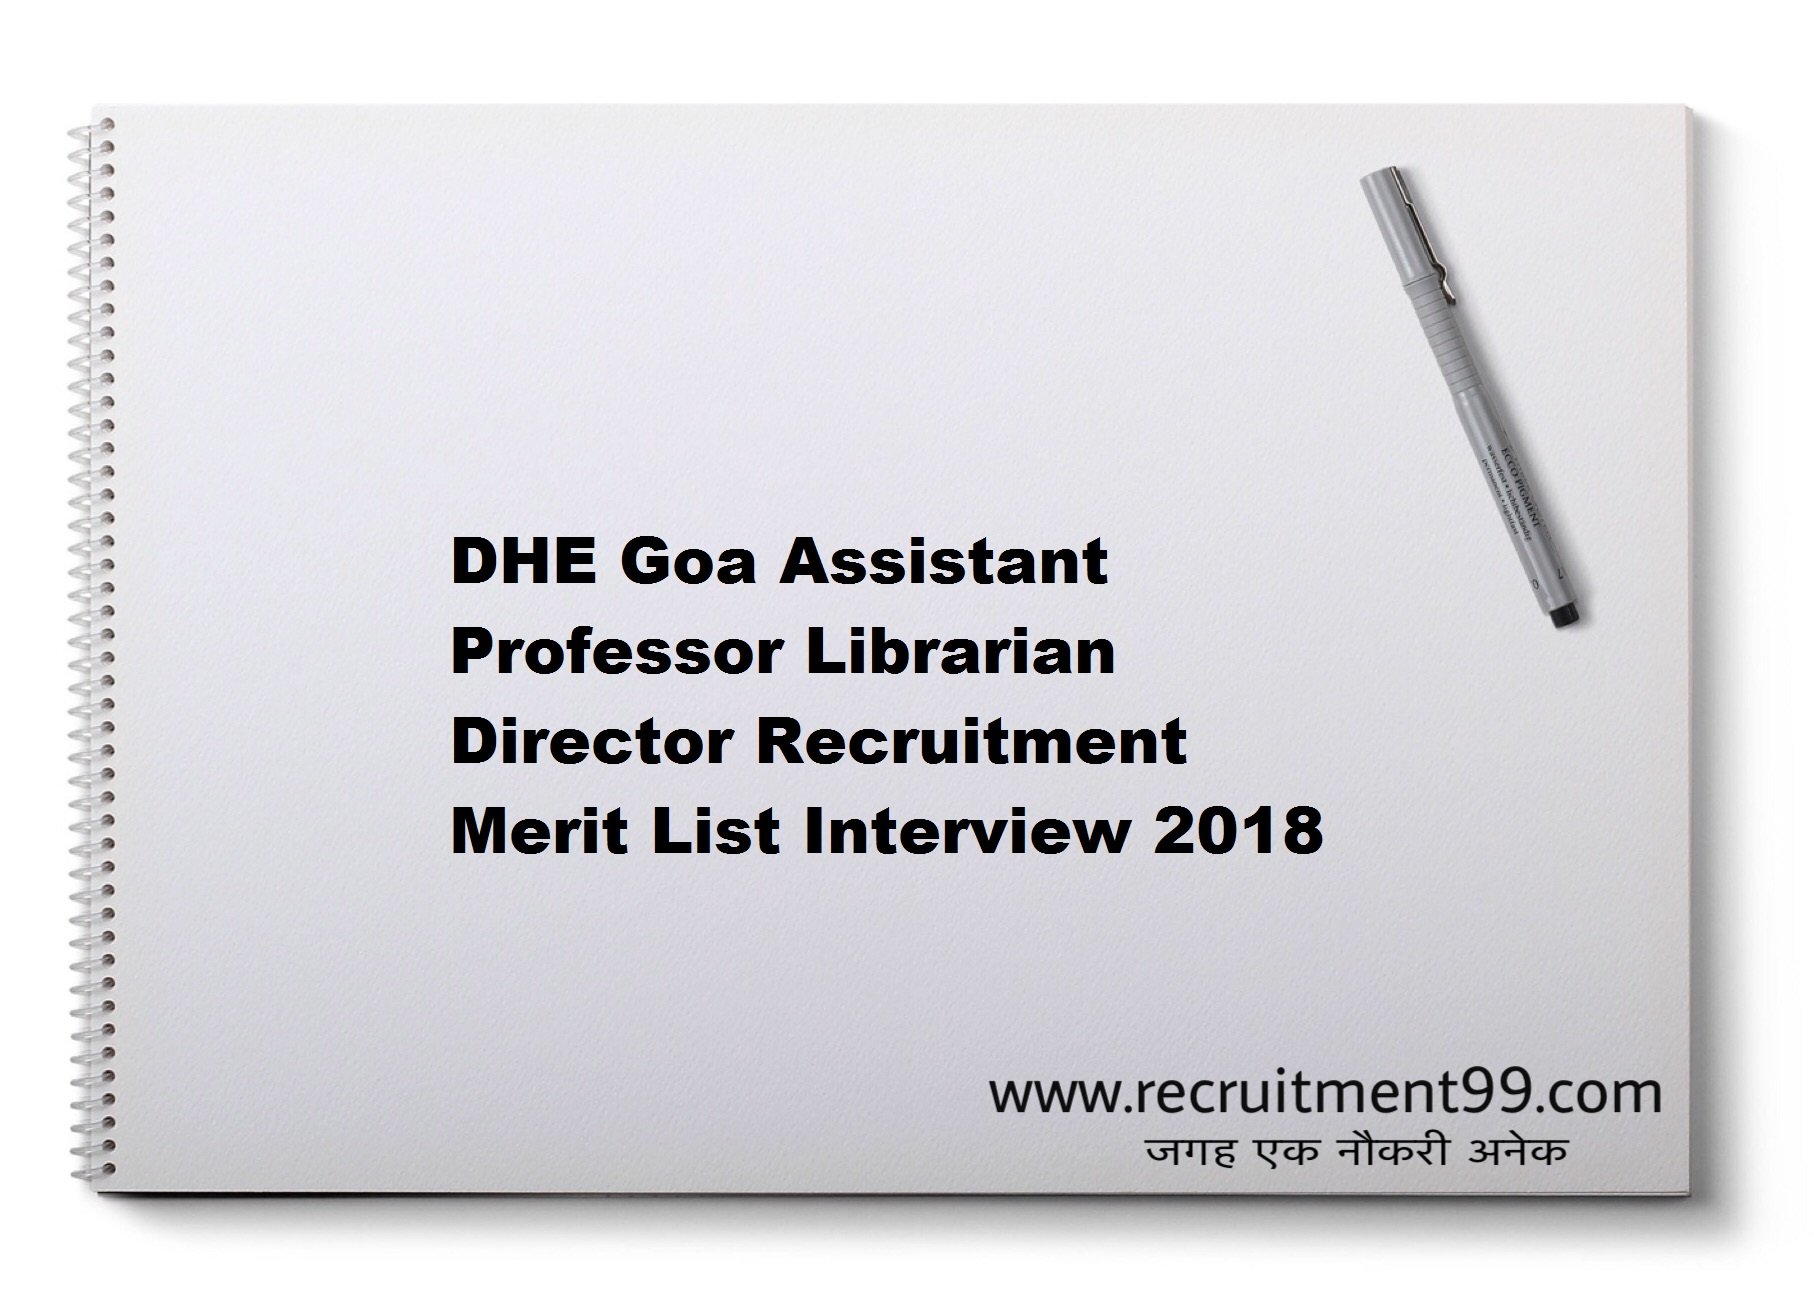 DHE Goa Assistant Professor Librarian Director Recruitment Merit List Interview 2018